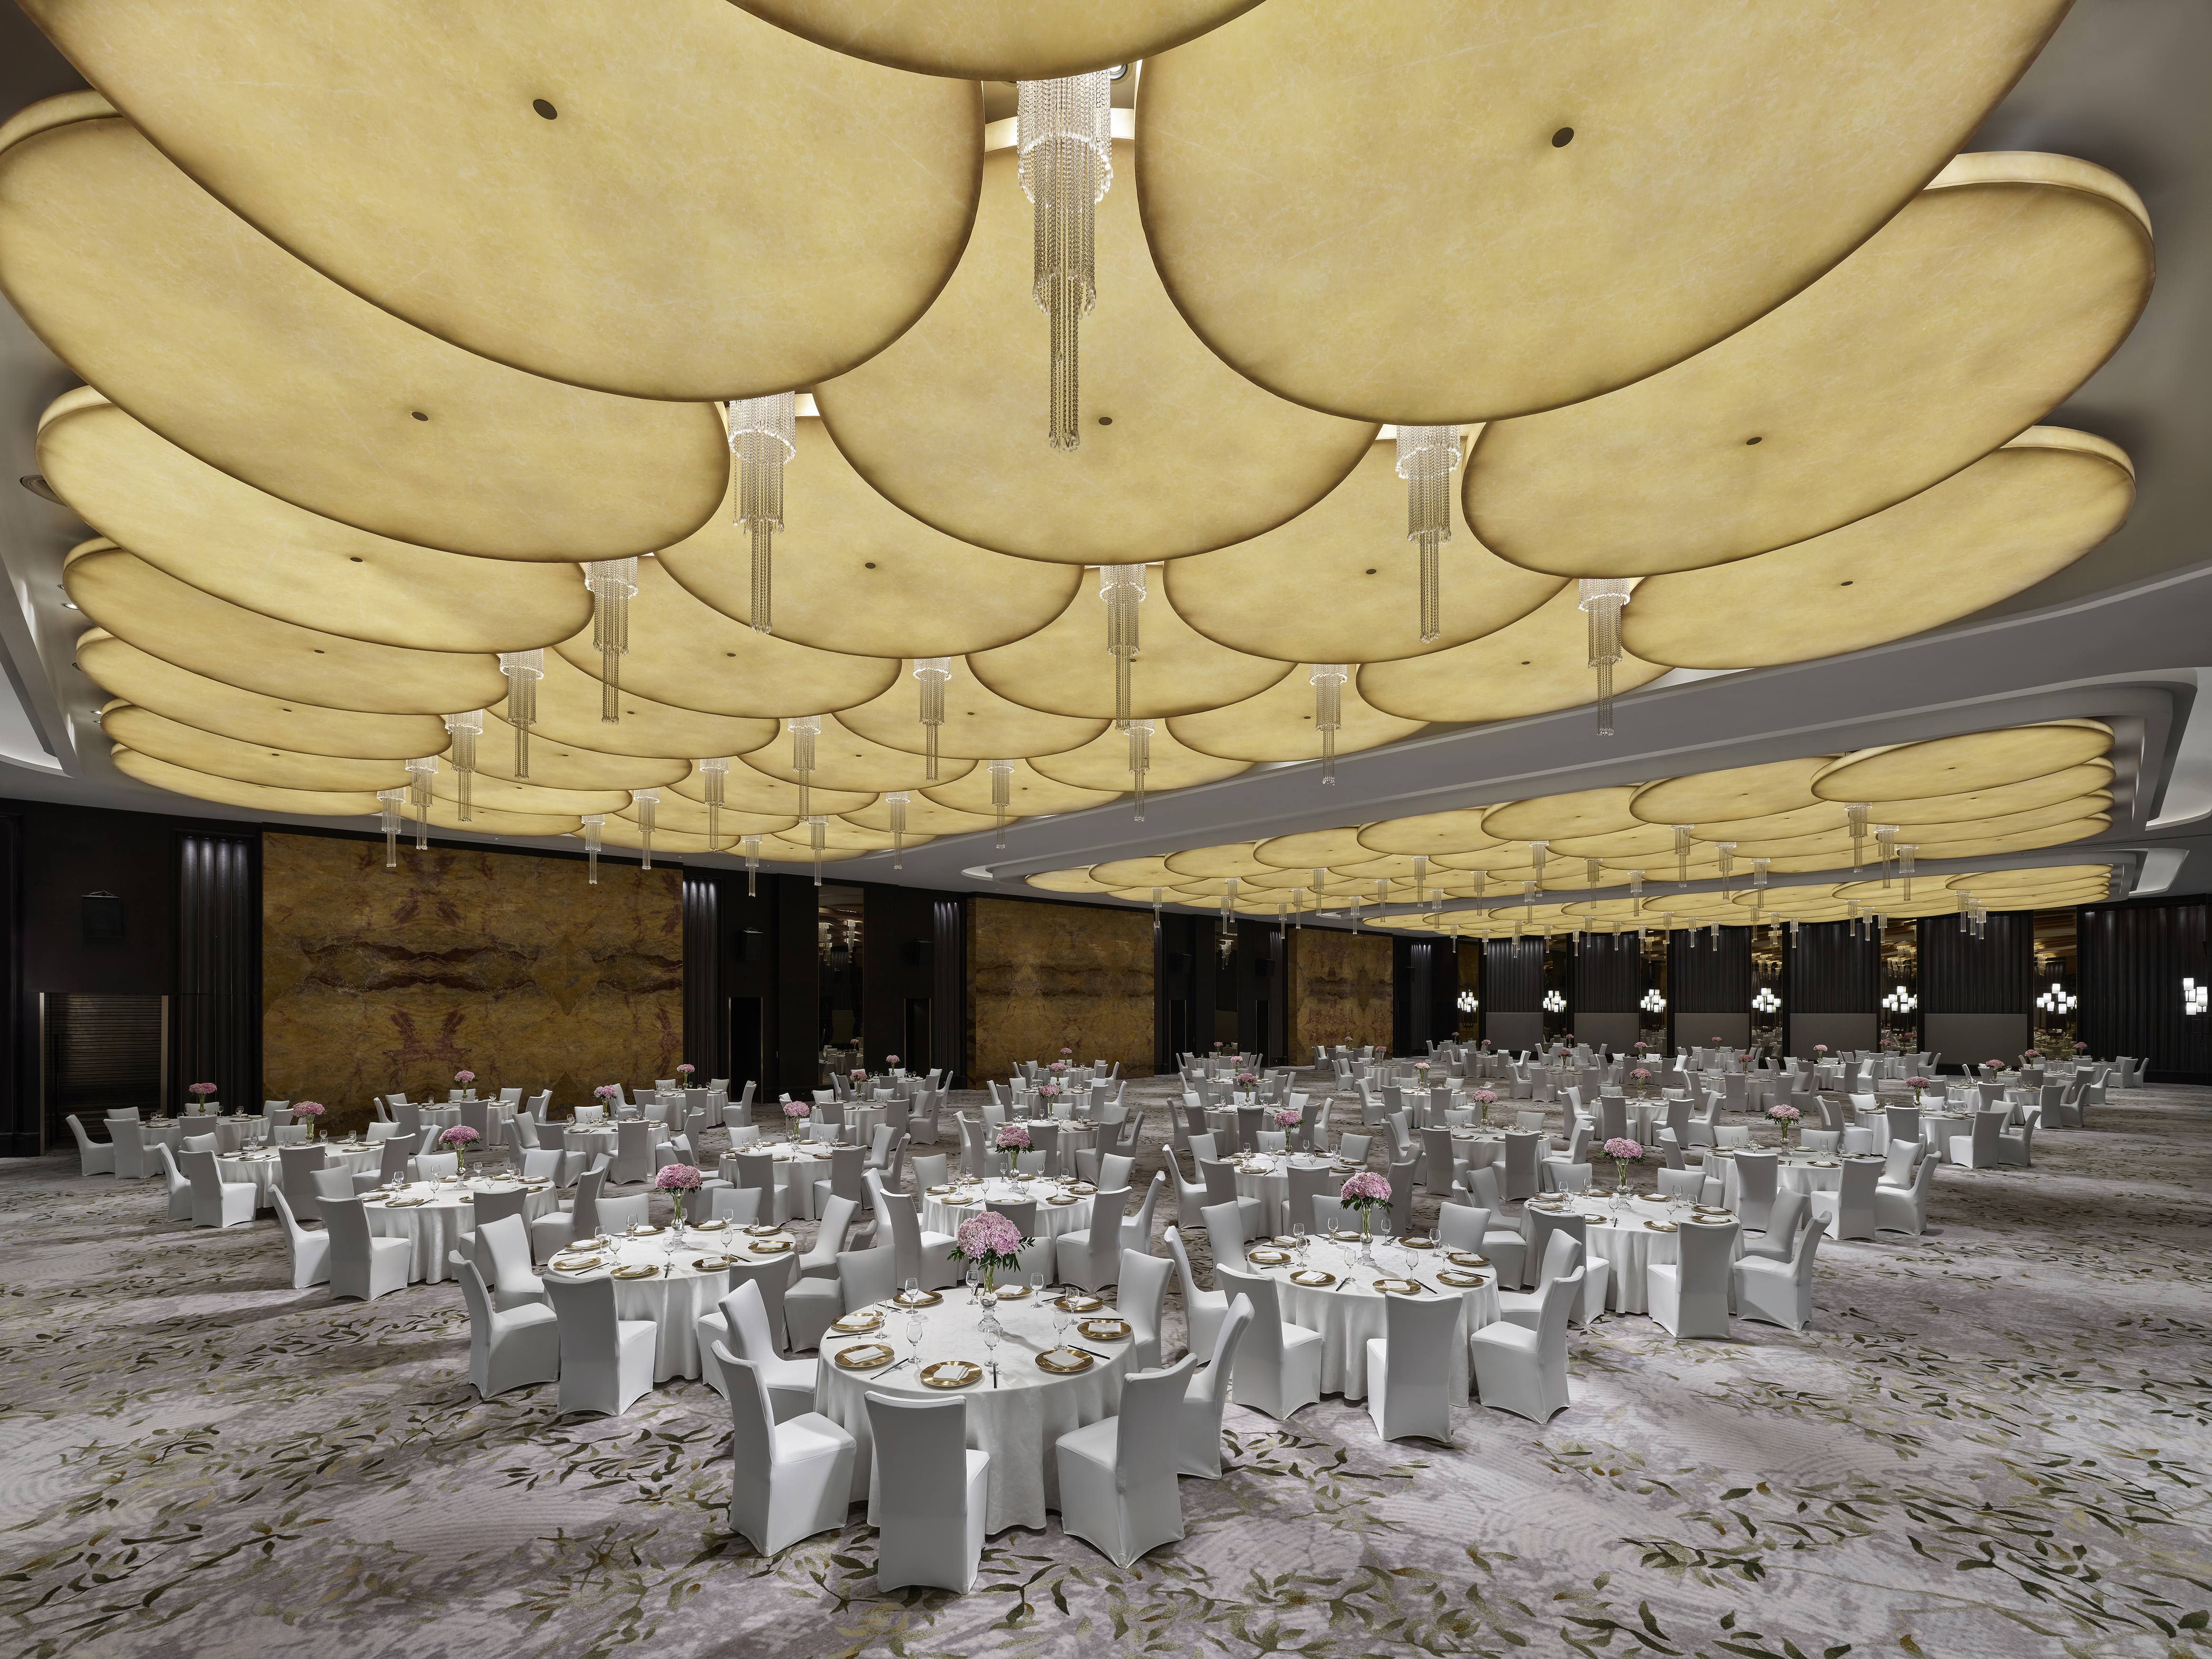 Grand Ballroom Setup with Round Tables for a Wedding